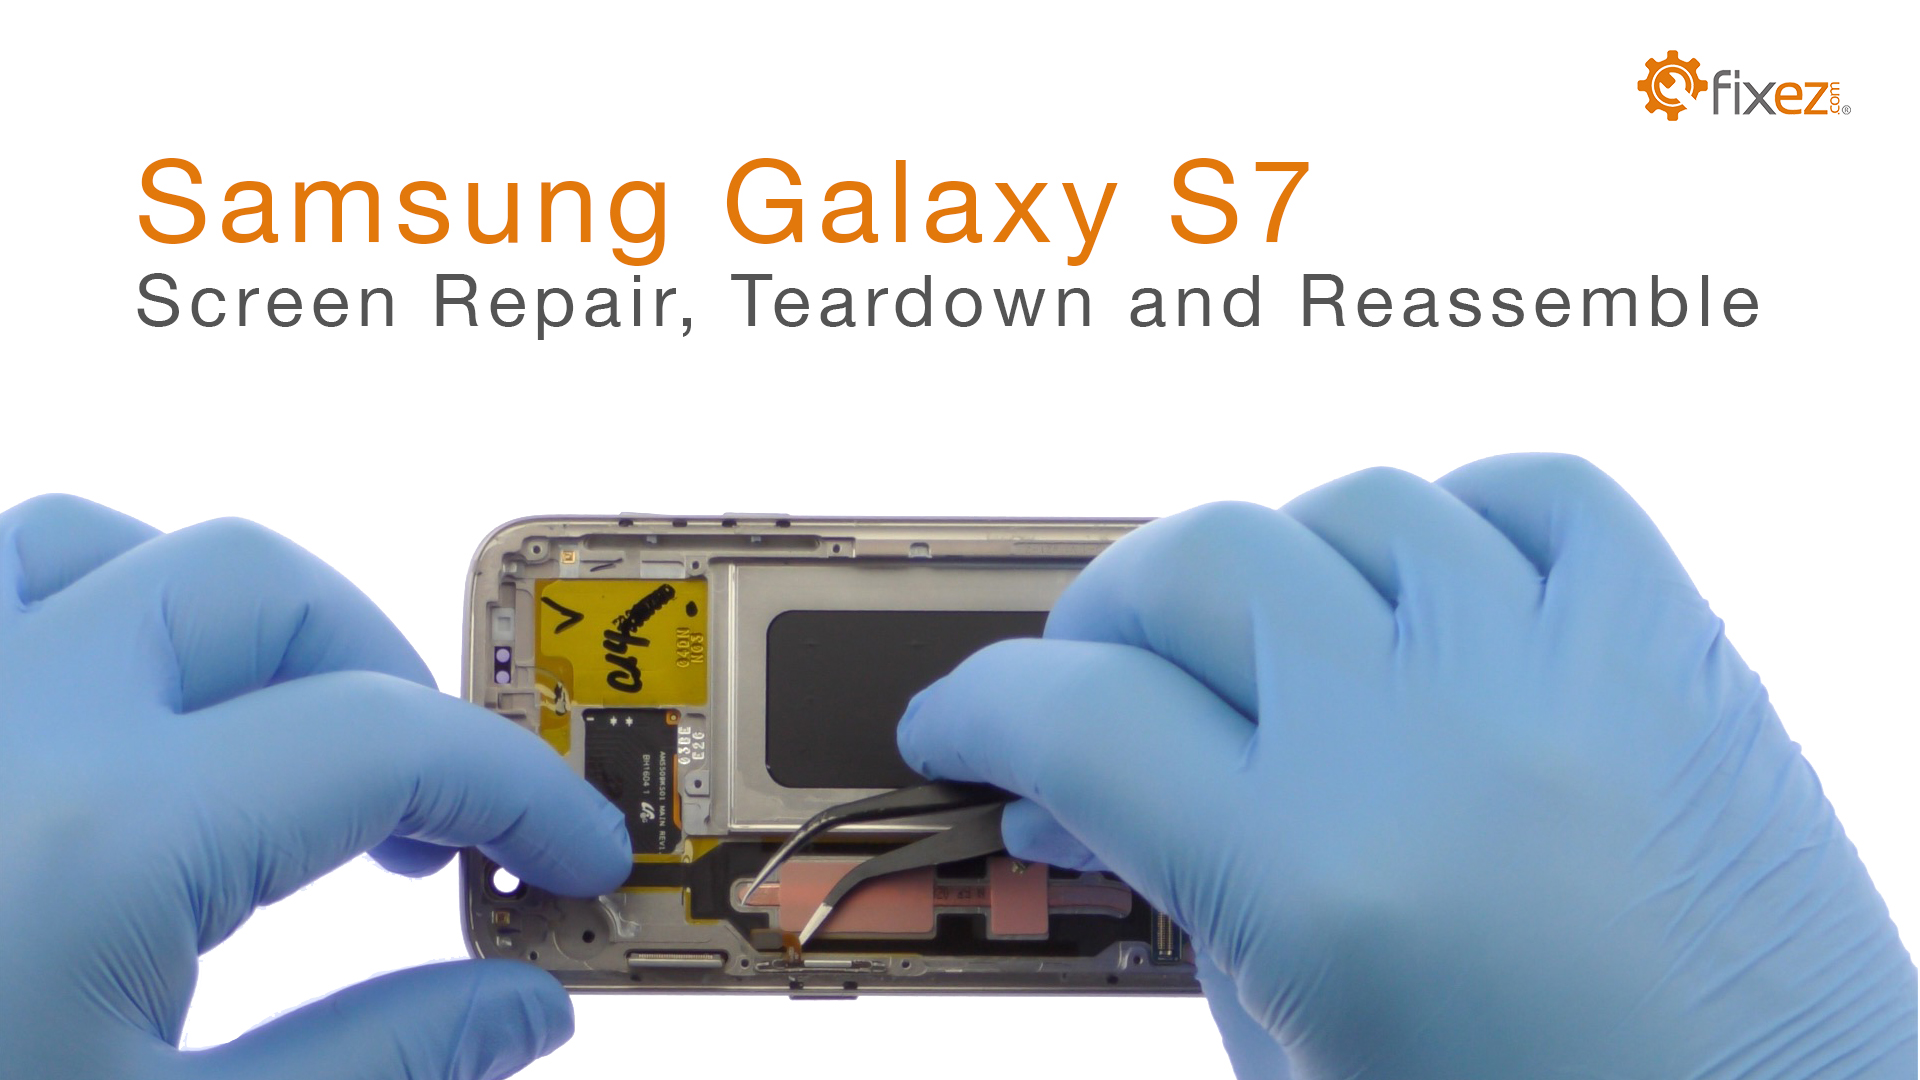 Samsung Galaxy S7 Screen Repair, Teardown and Reassemble